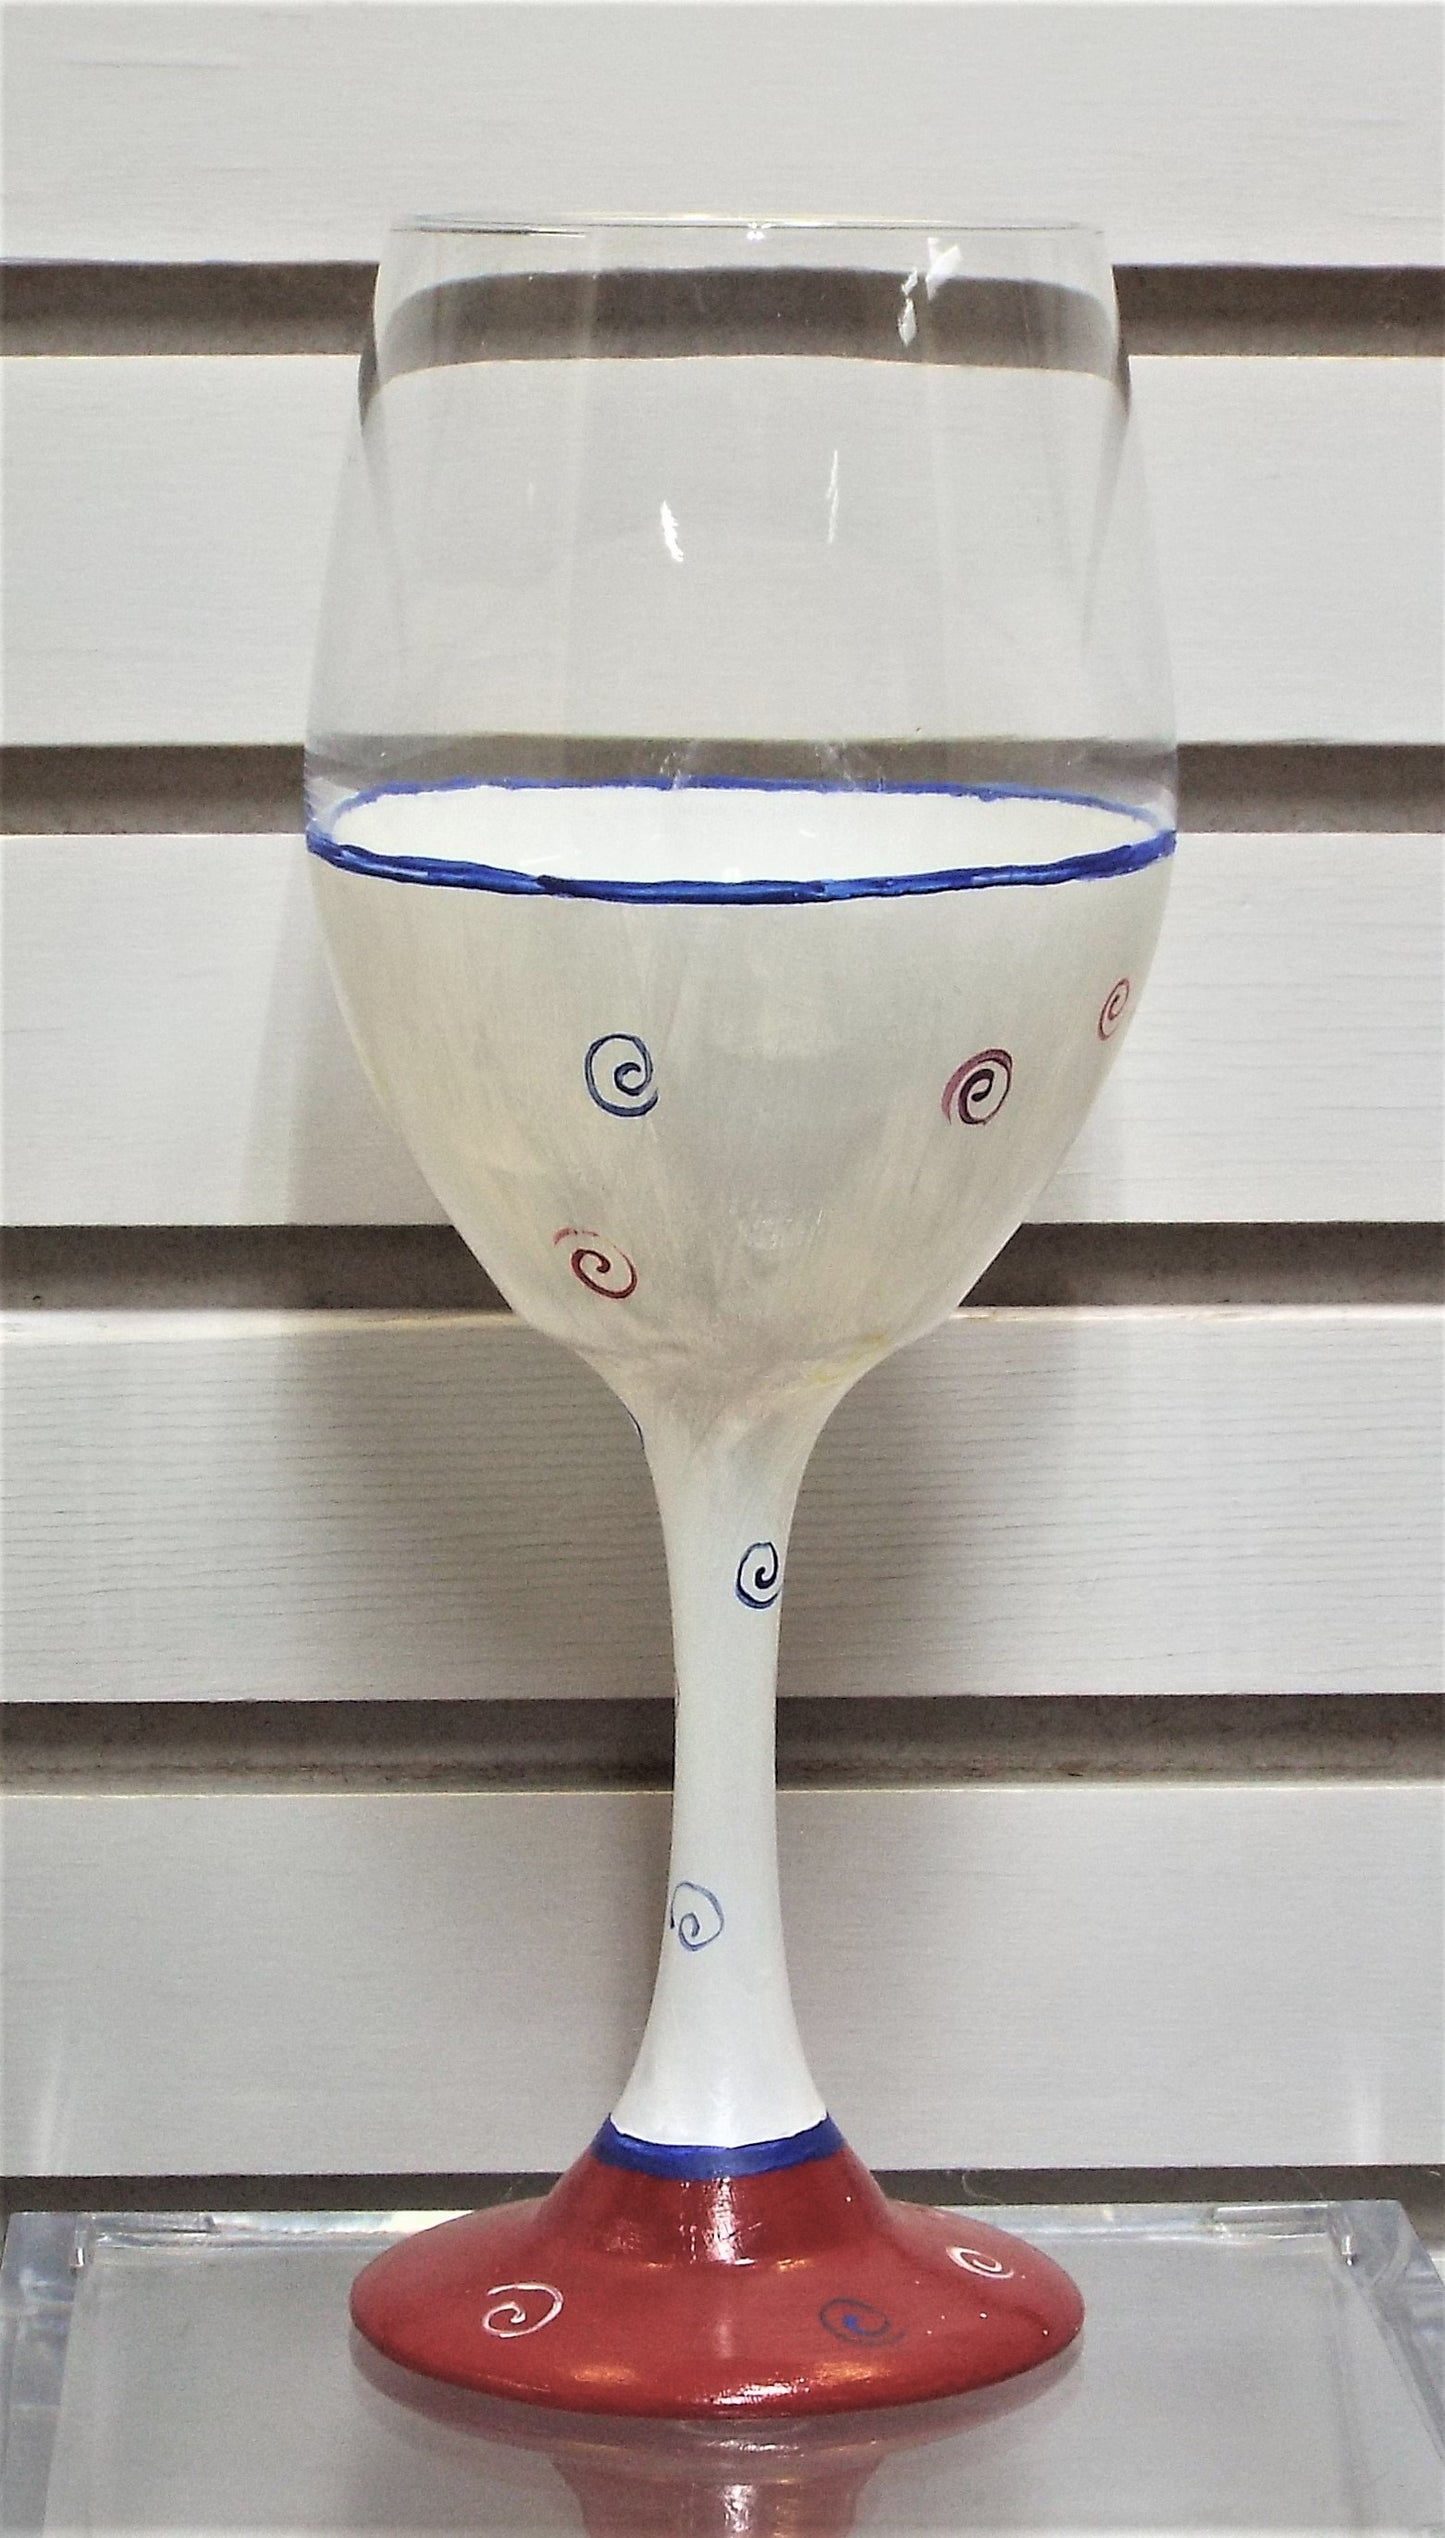 Painted Glassware